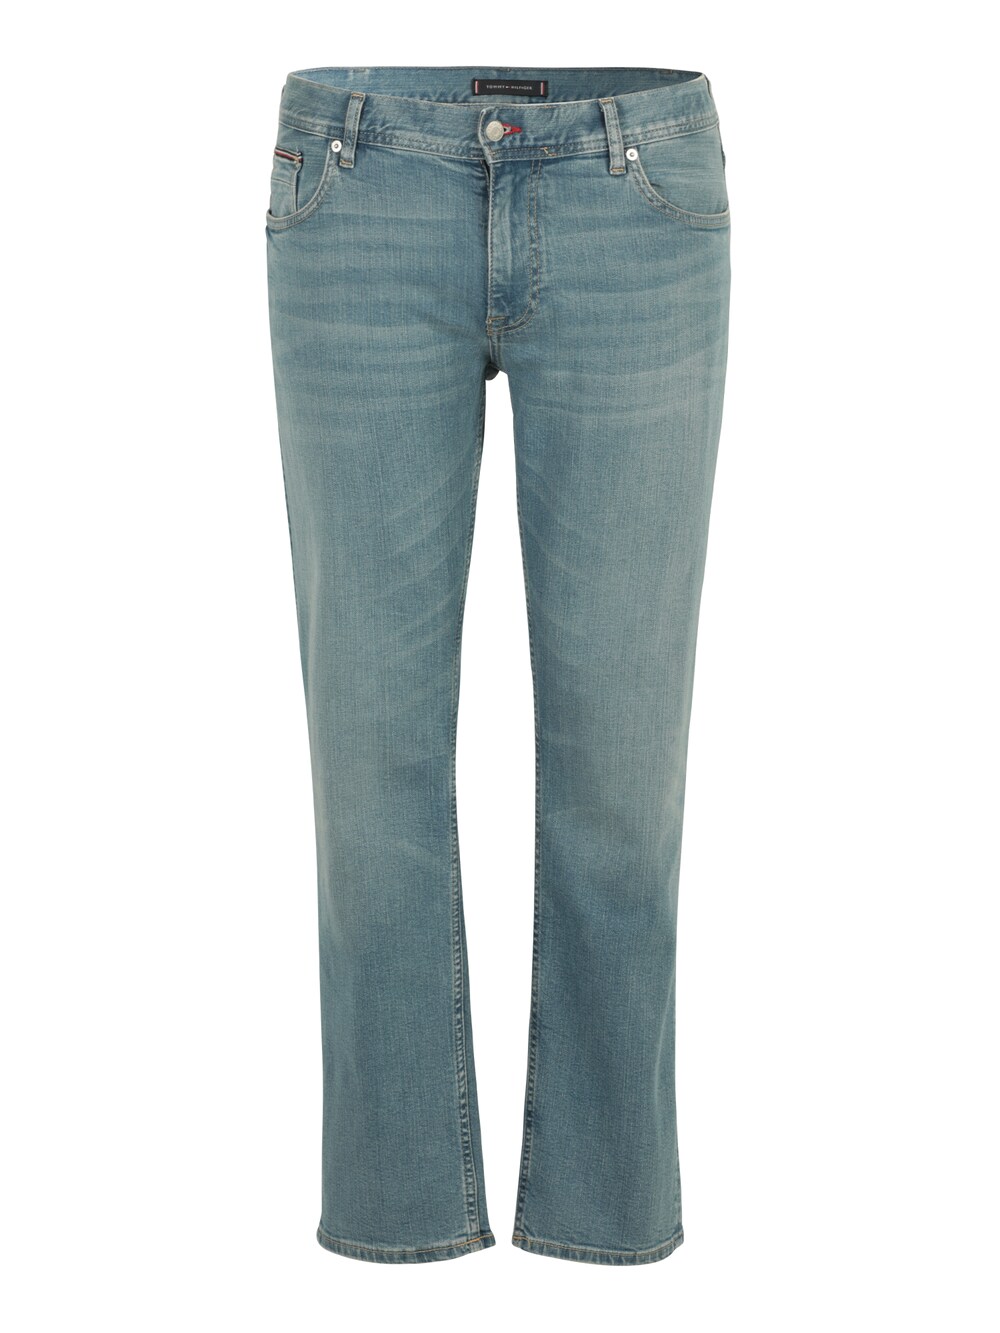 Обычные джинсы Tommy Hilfiger Big & Tall MADISON AMSTON, синий